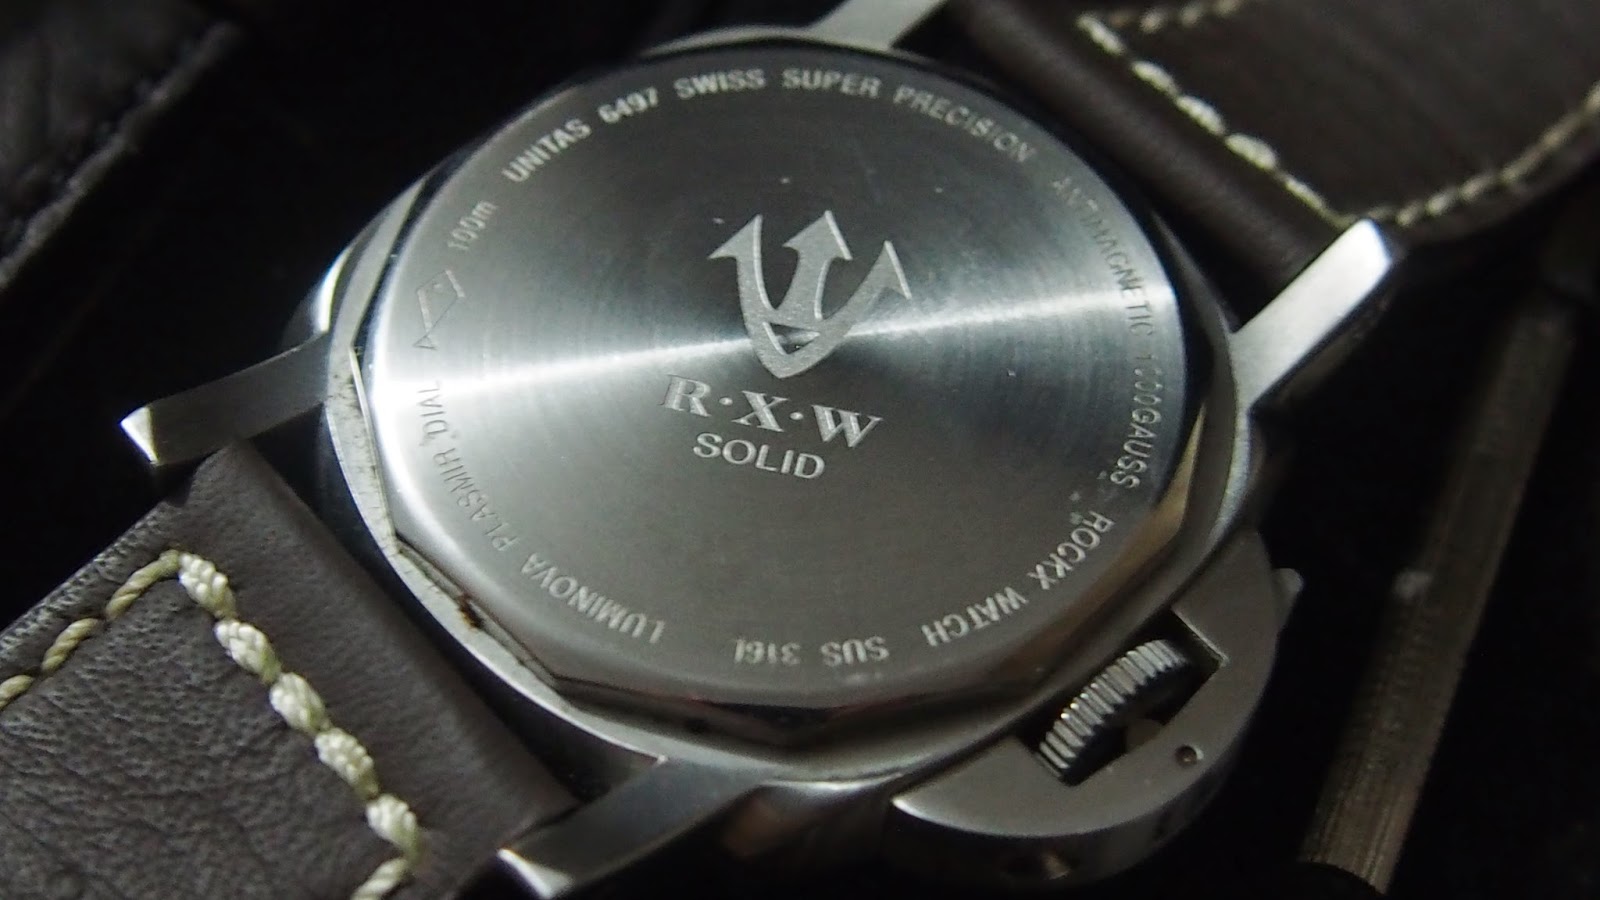 Watch6 classic 47 мм. Часы RXW. Marina Militare зонт.